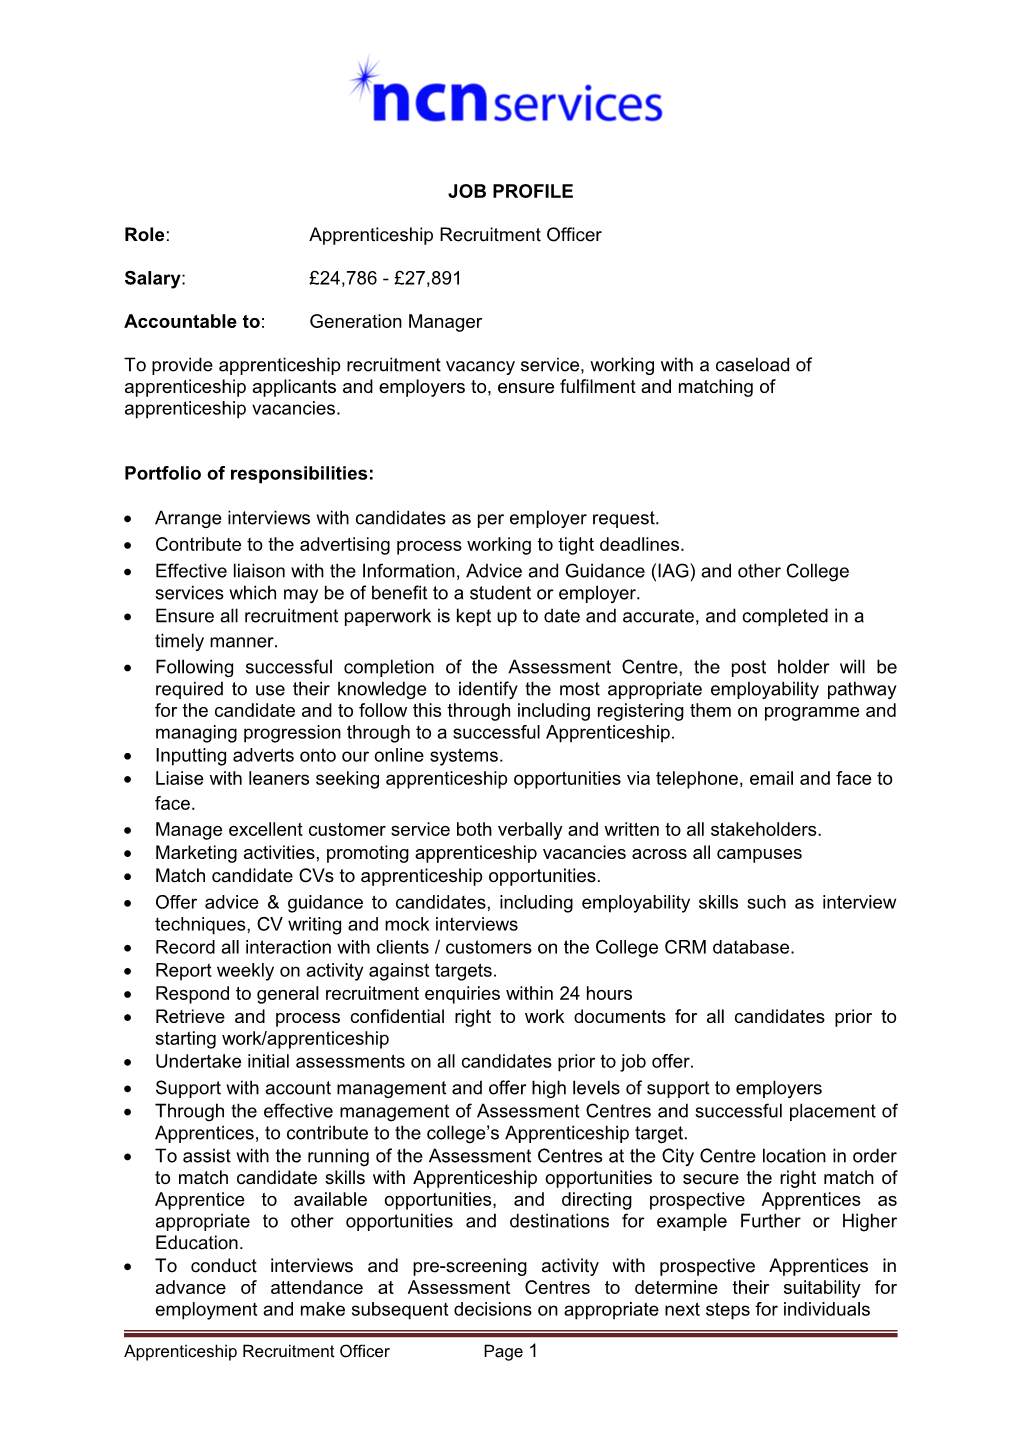 Role: Apprenticeship Recruitment Officer